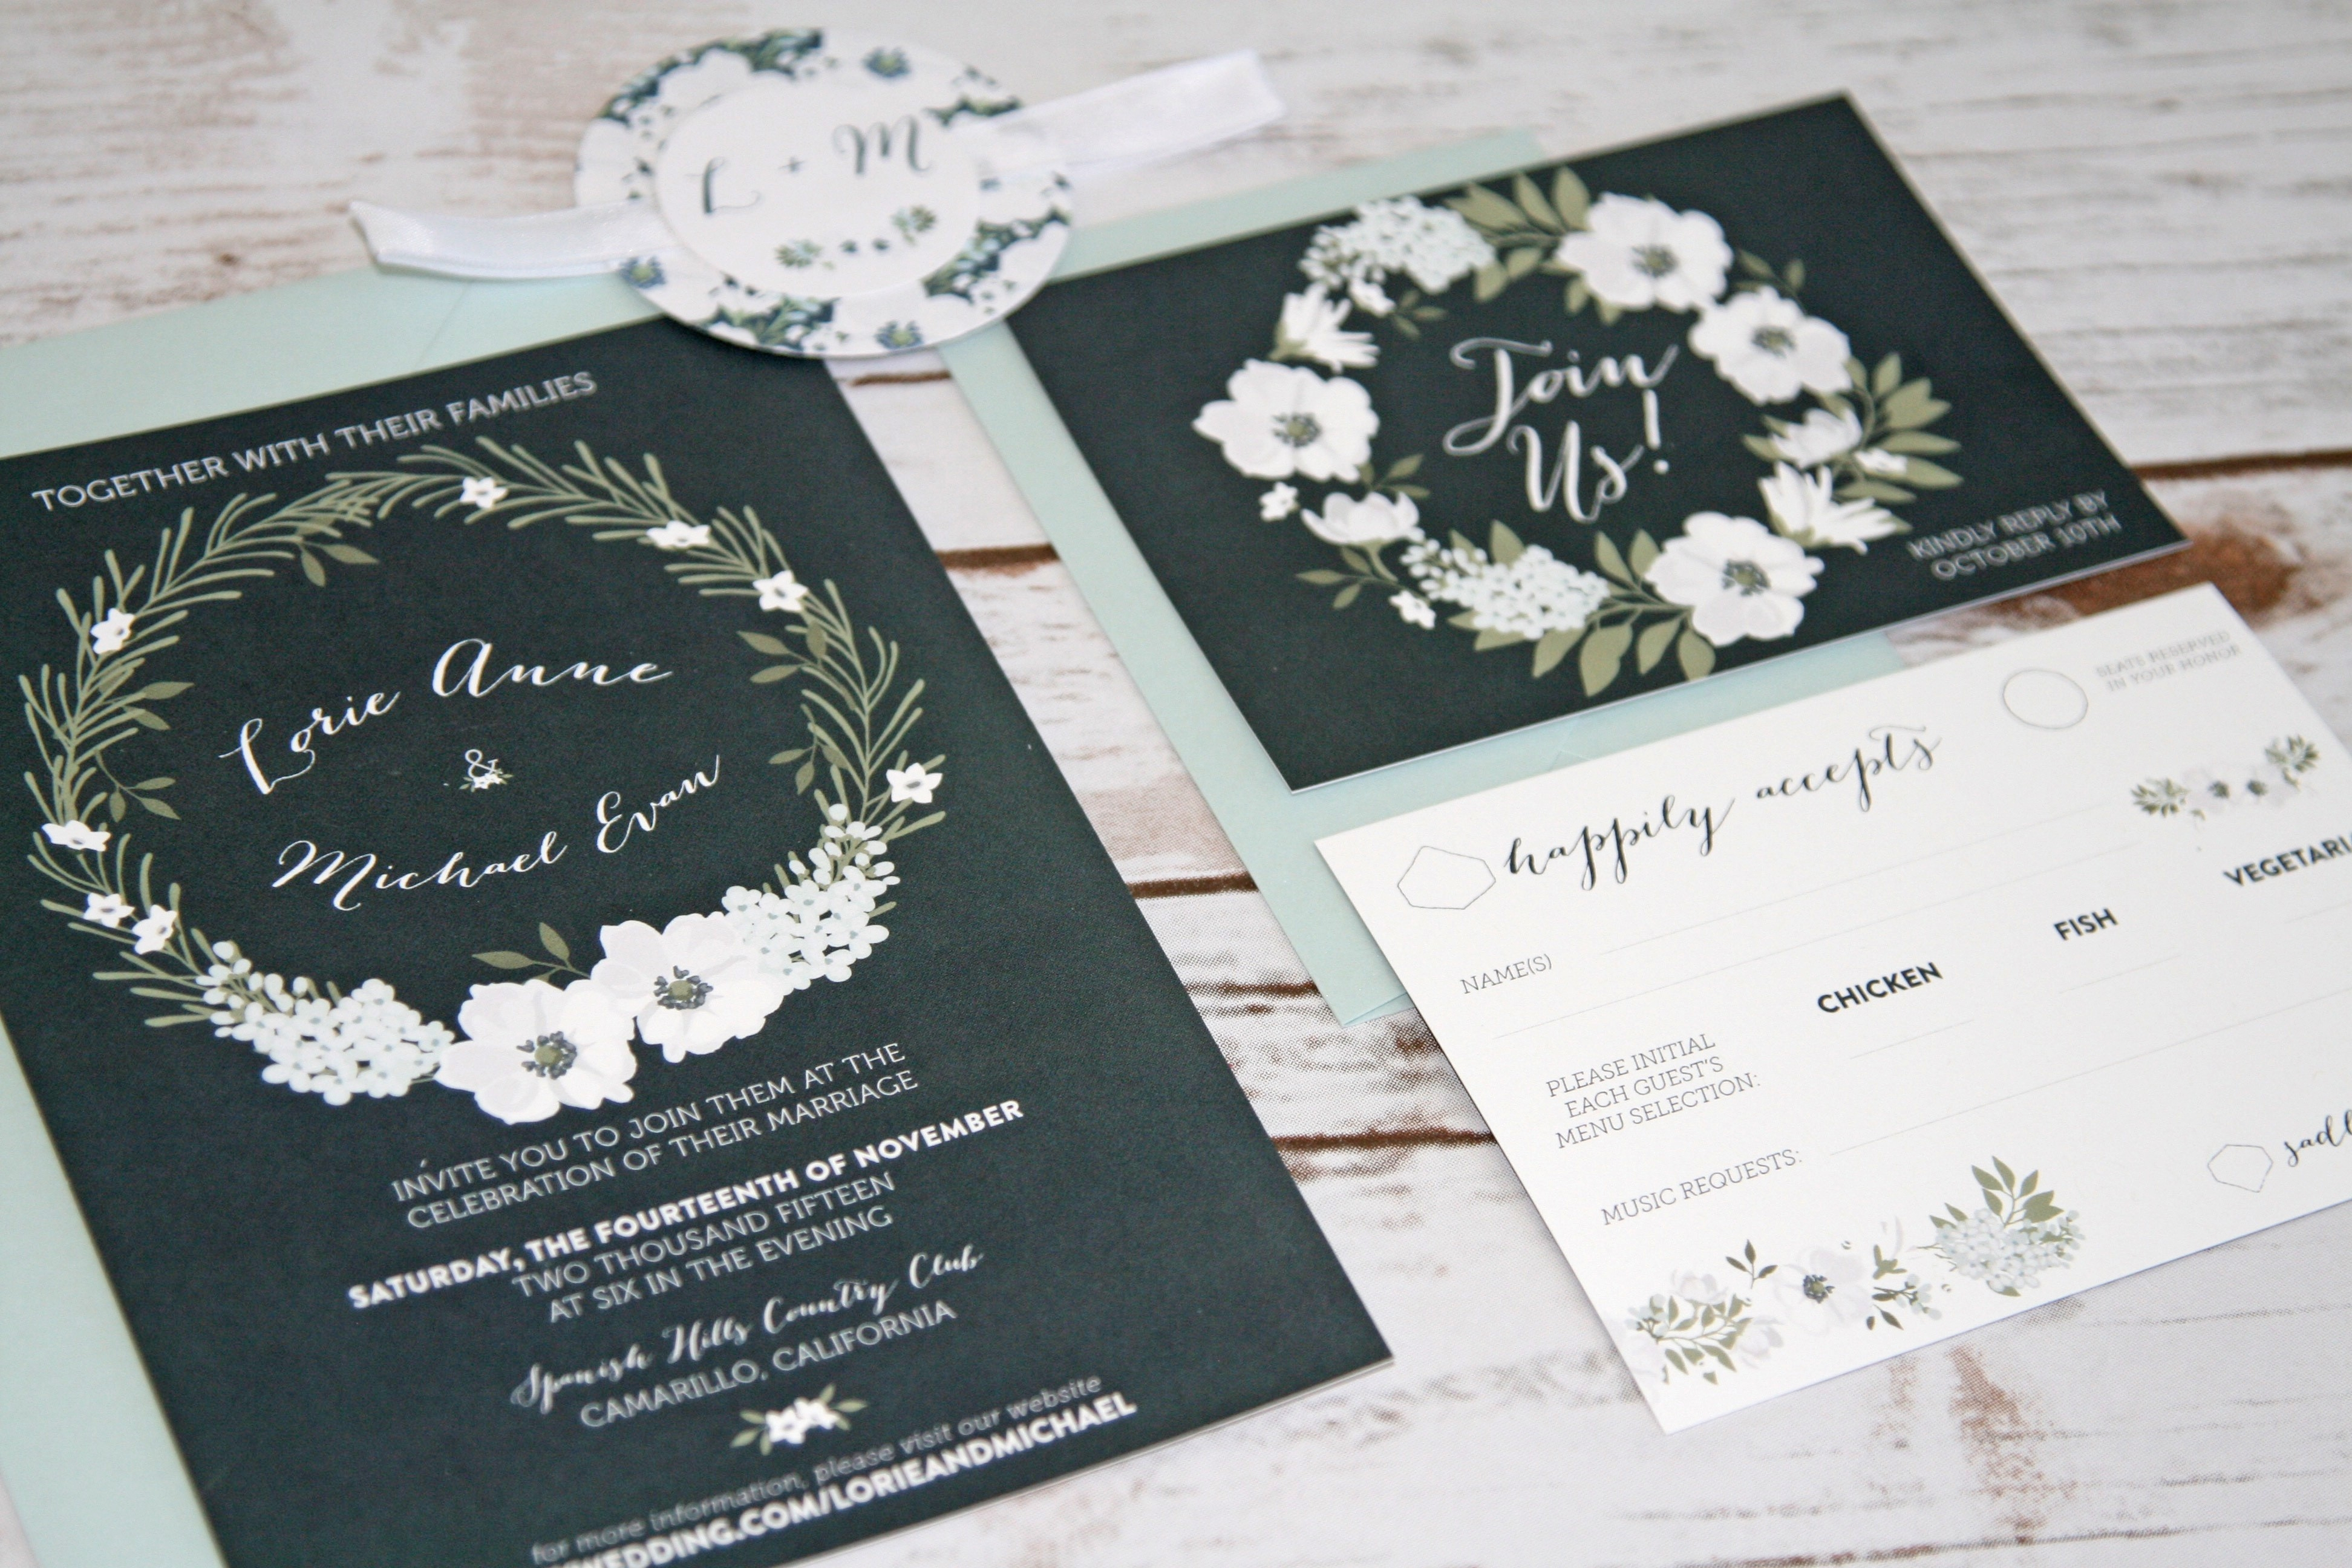 Print At Home Wedding Invitations Stunning Print Your Own Wedding Invitations 19 In Picture Design